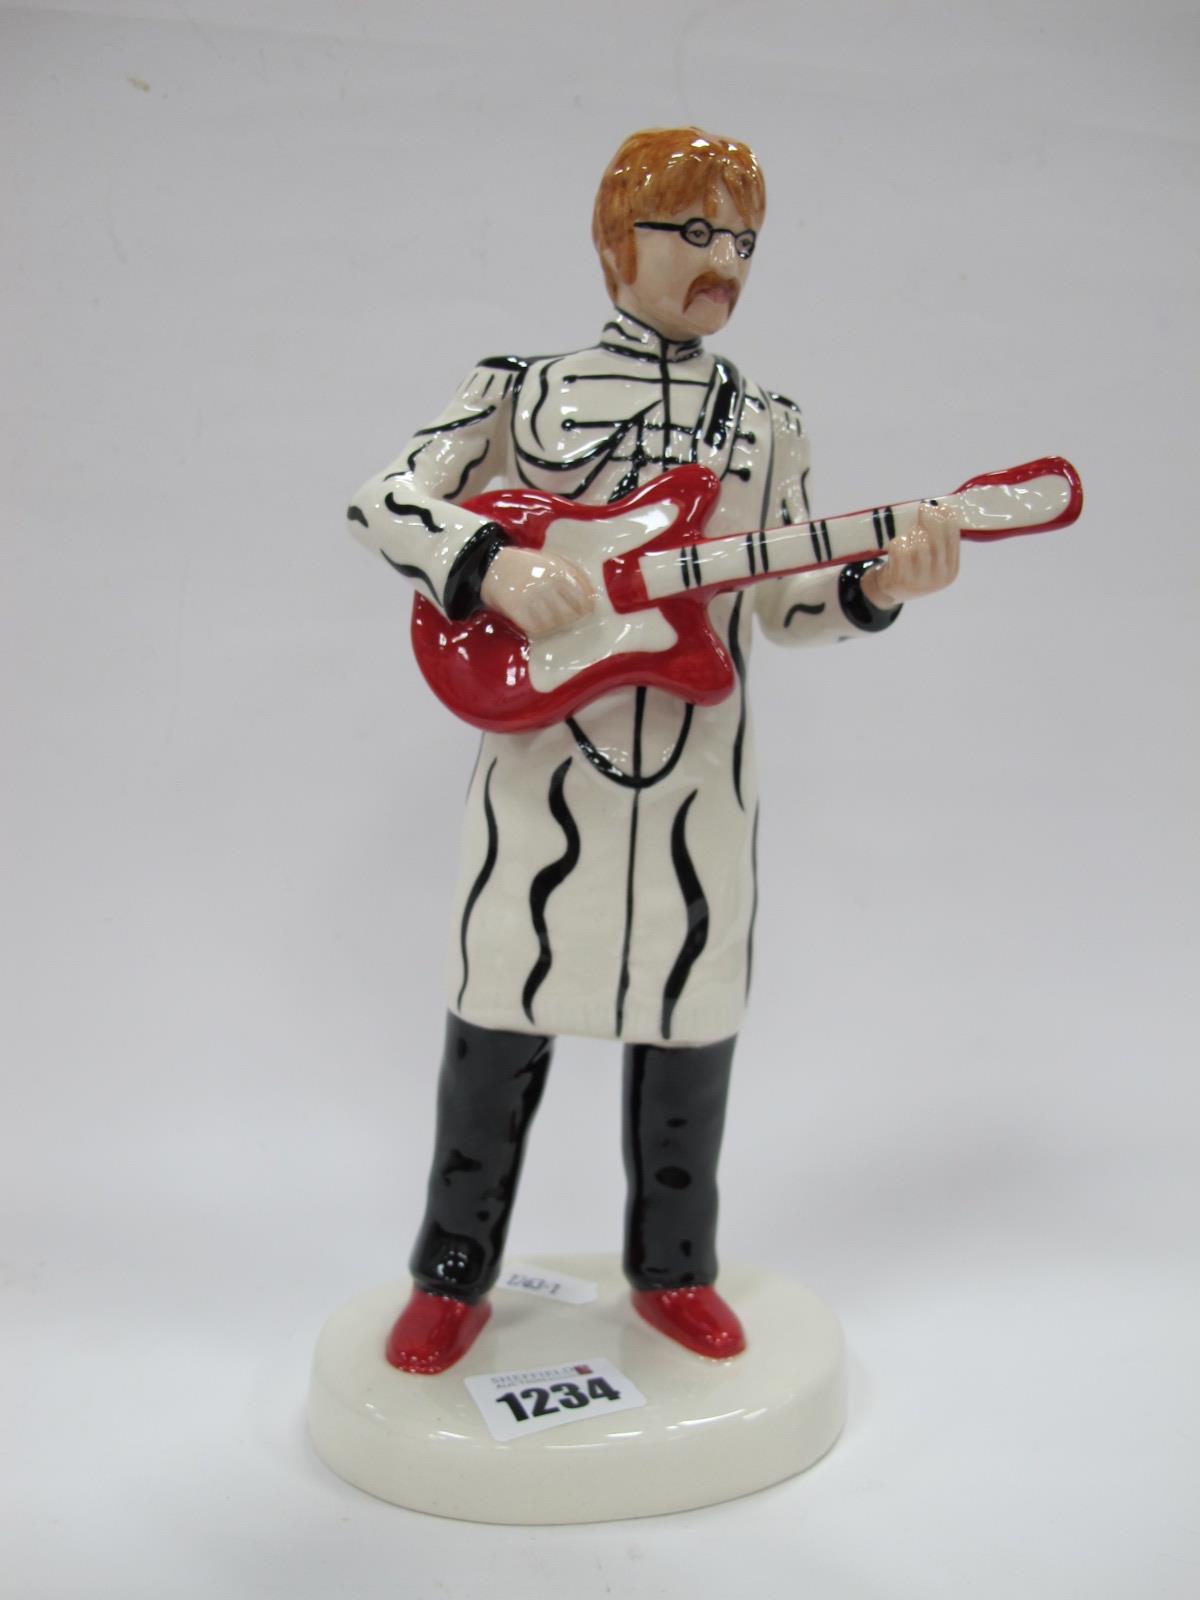 A Rare Lorna Bailey John Lennon Figure (Sgt Pepper), limited edition colourway 1/1, 27cm high.